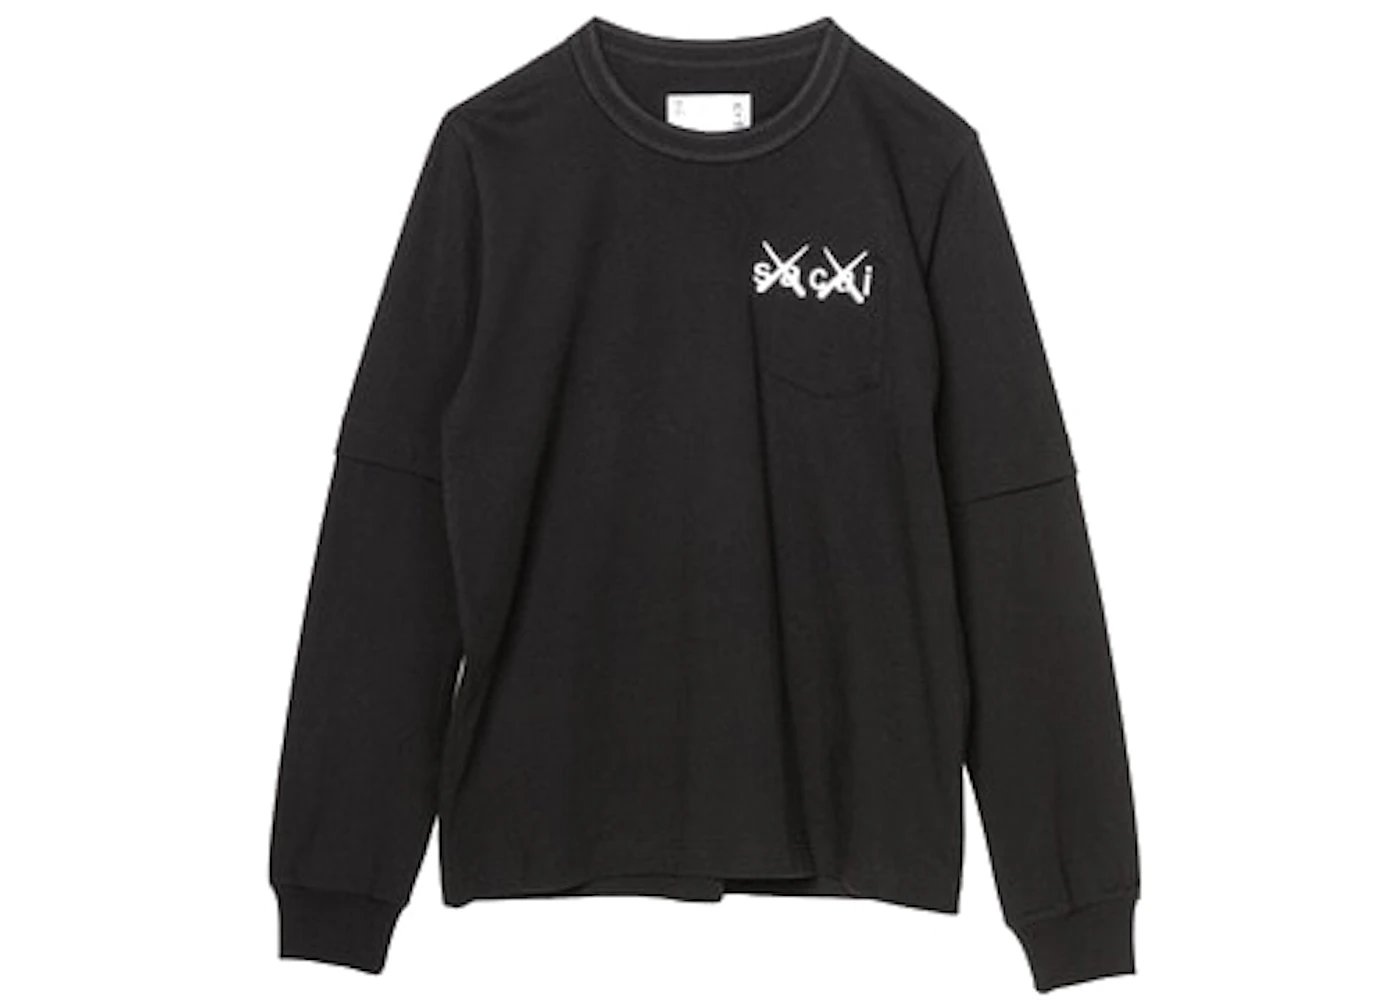 KAWS x Sacai Embroidery L/S Tee Black Men's - FW21 - GB